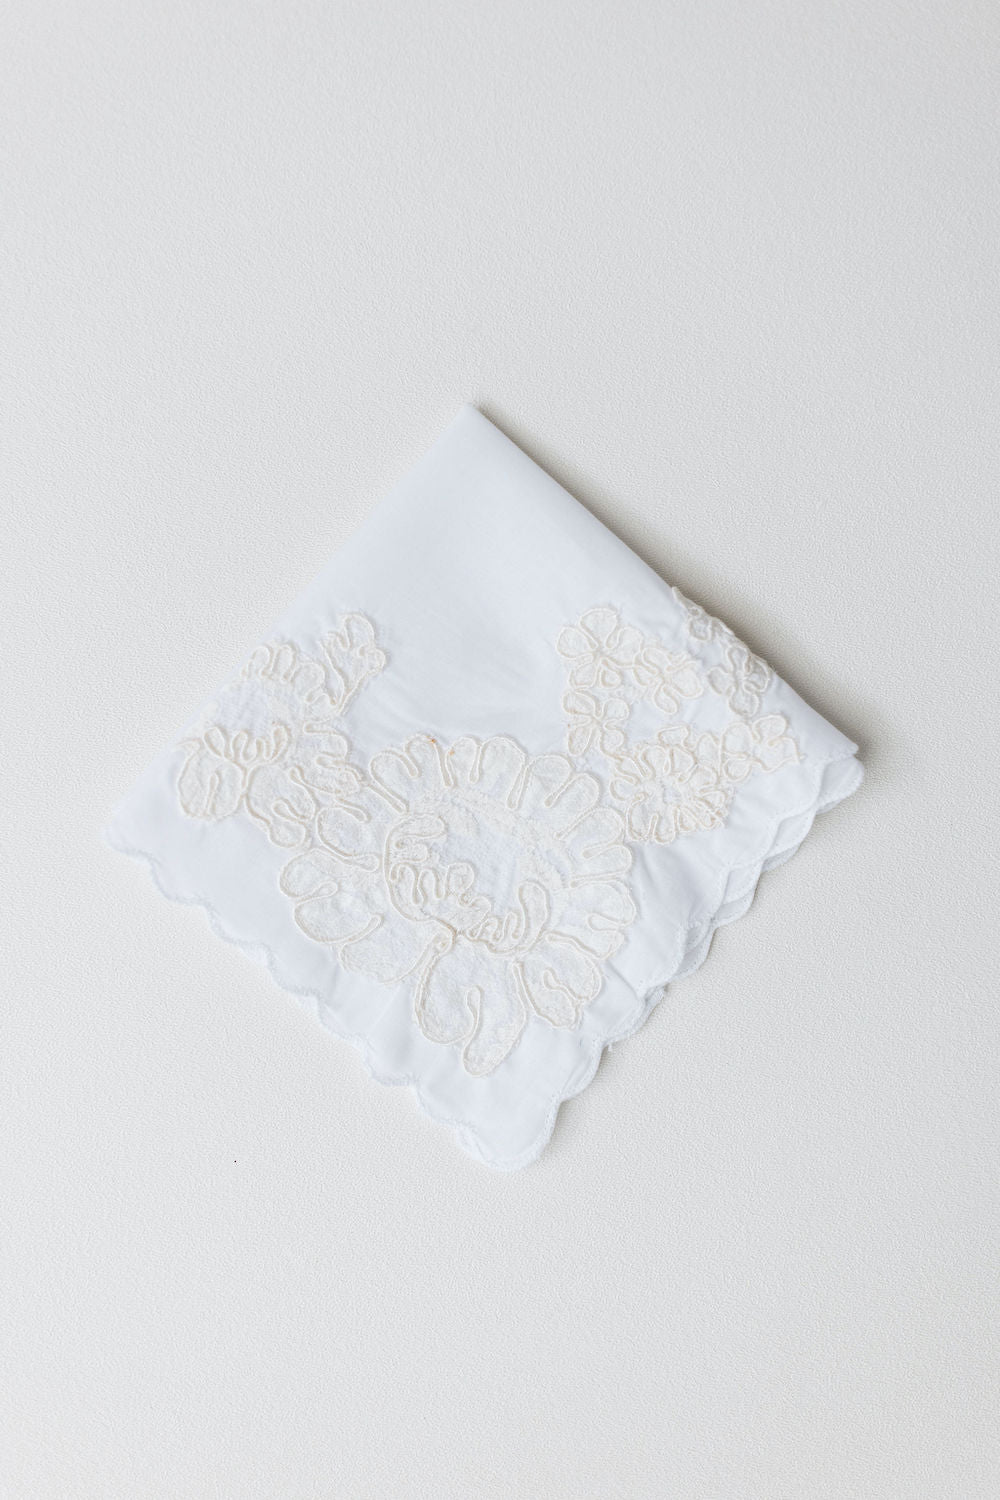 handmade wedding handkerchief in ivory from mom's wedding dress lace handmade by The Garter Girl